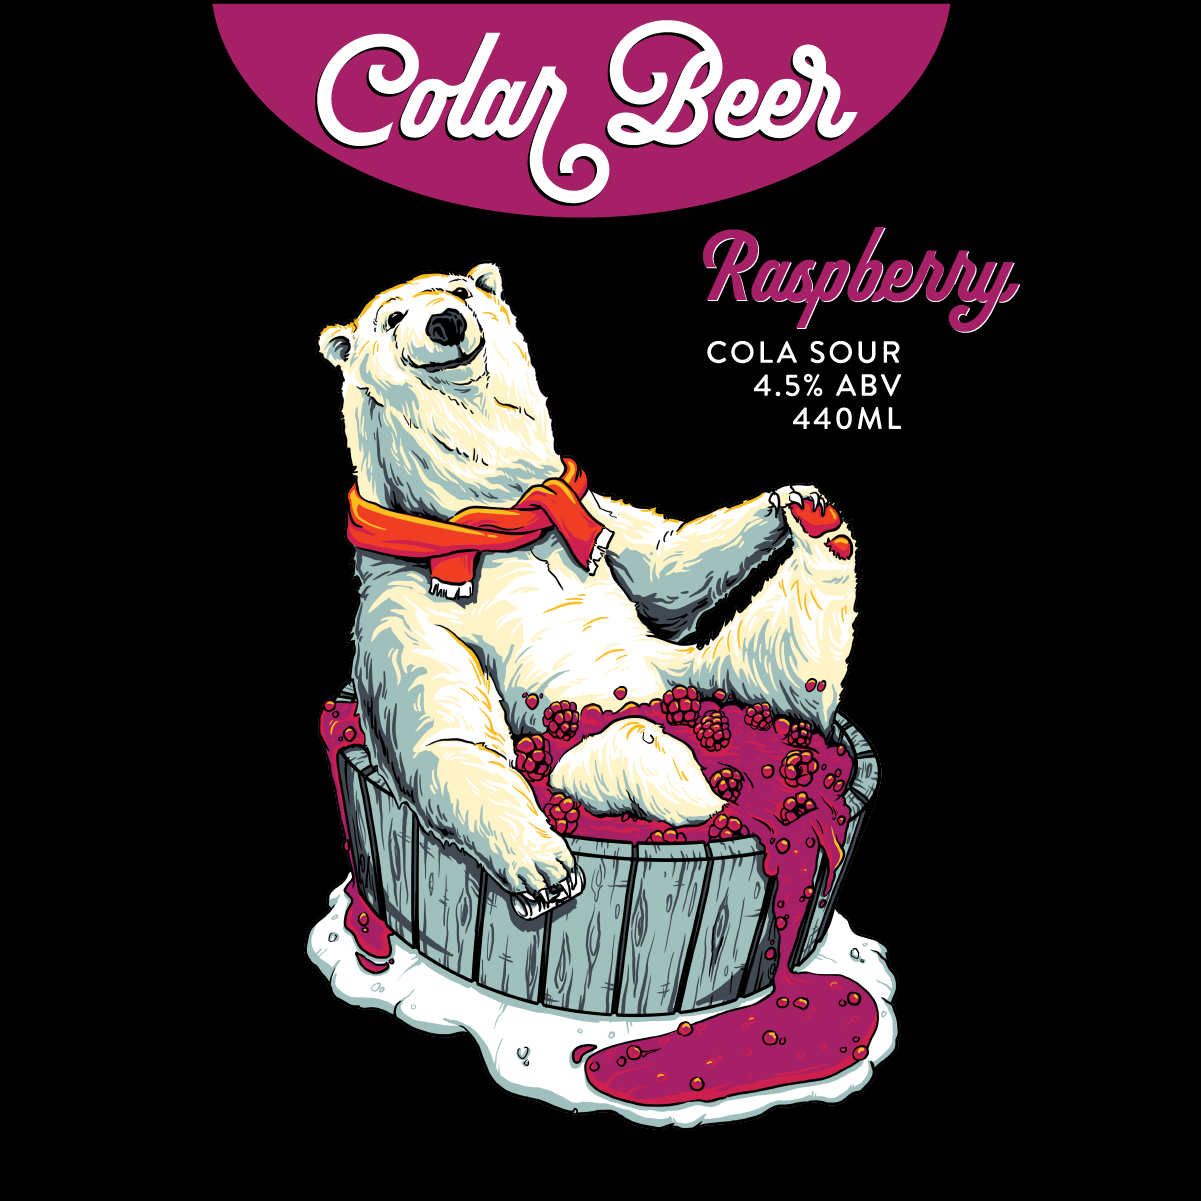 Colar Beer Raspberry